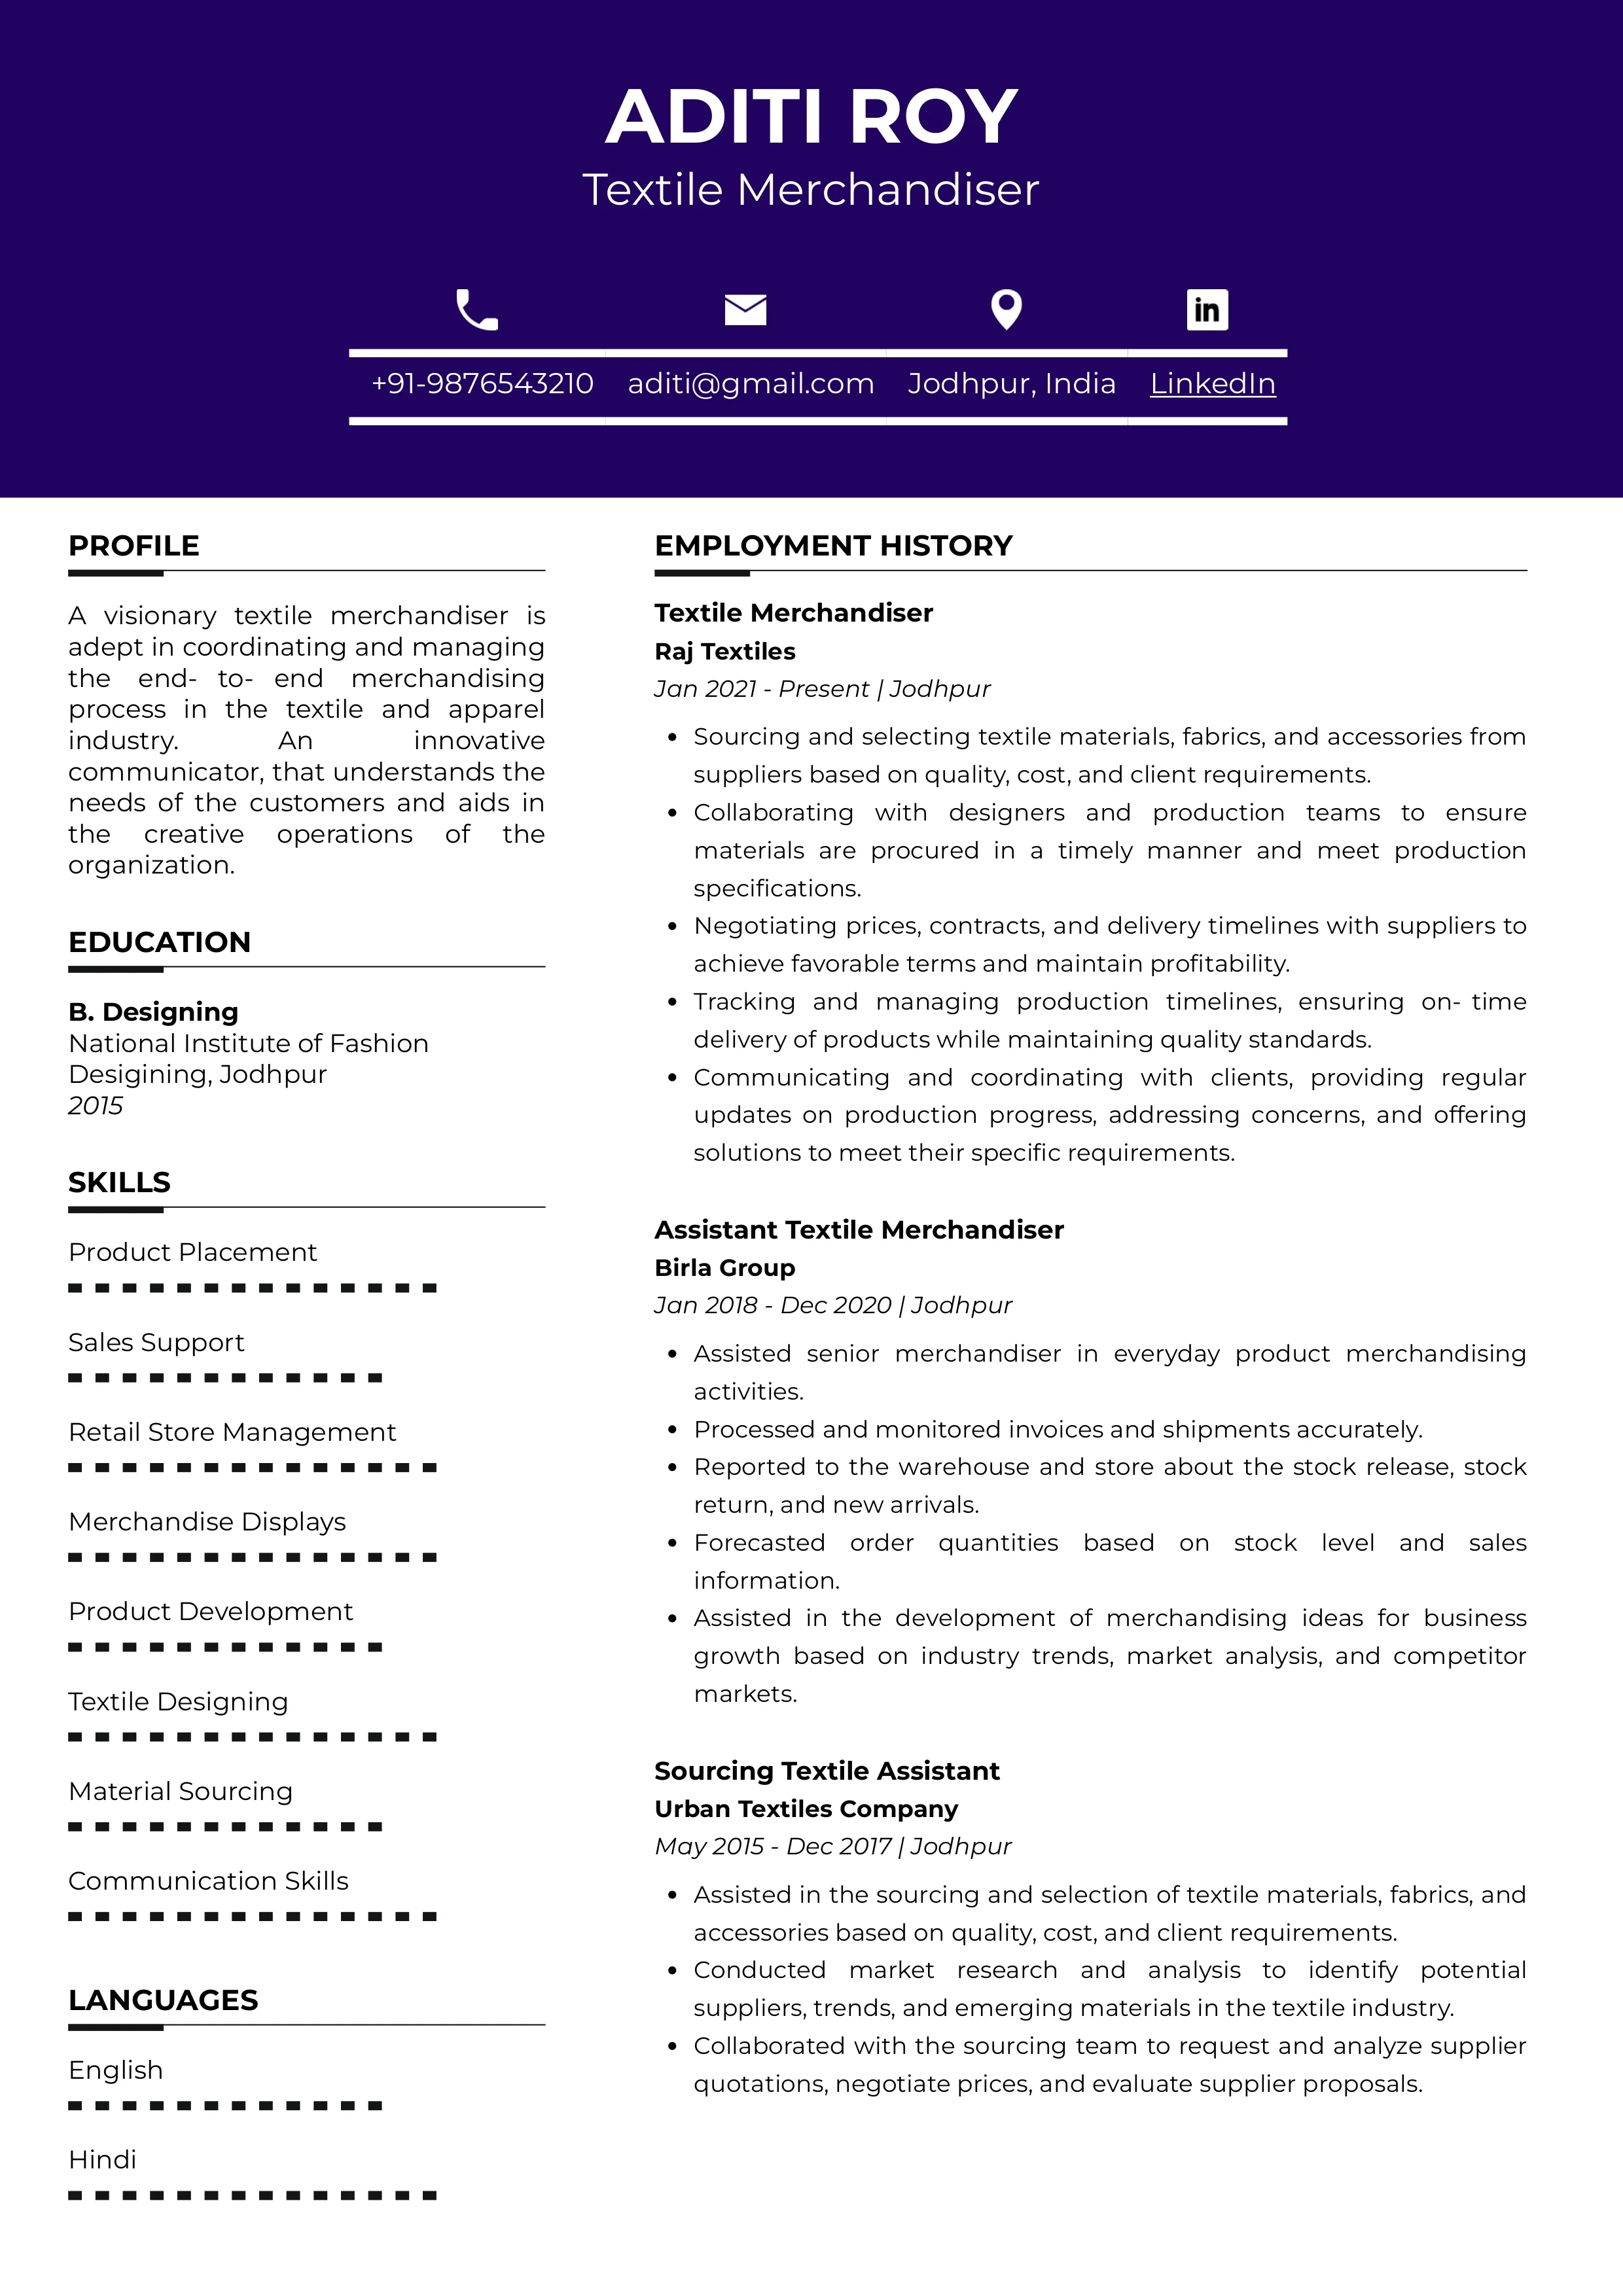 Sample Resume of Textile Merchandiser | Free Resume Templates & Samples on Resumod.co